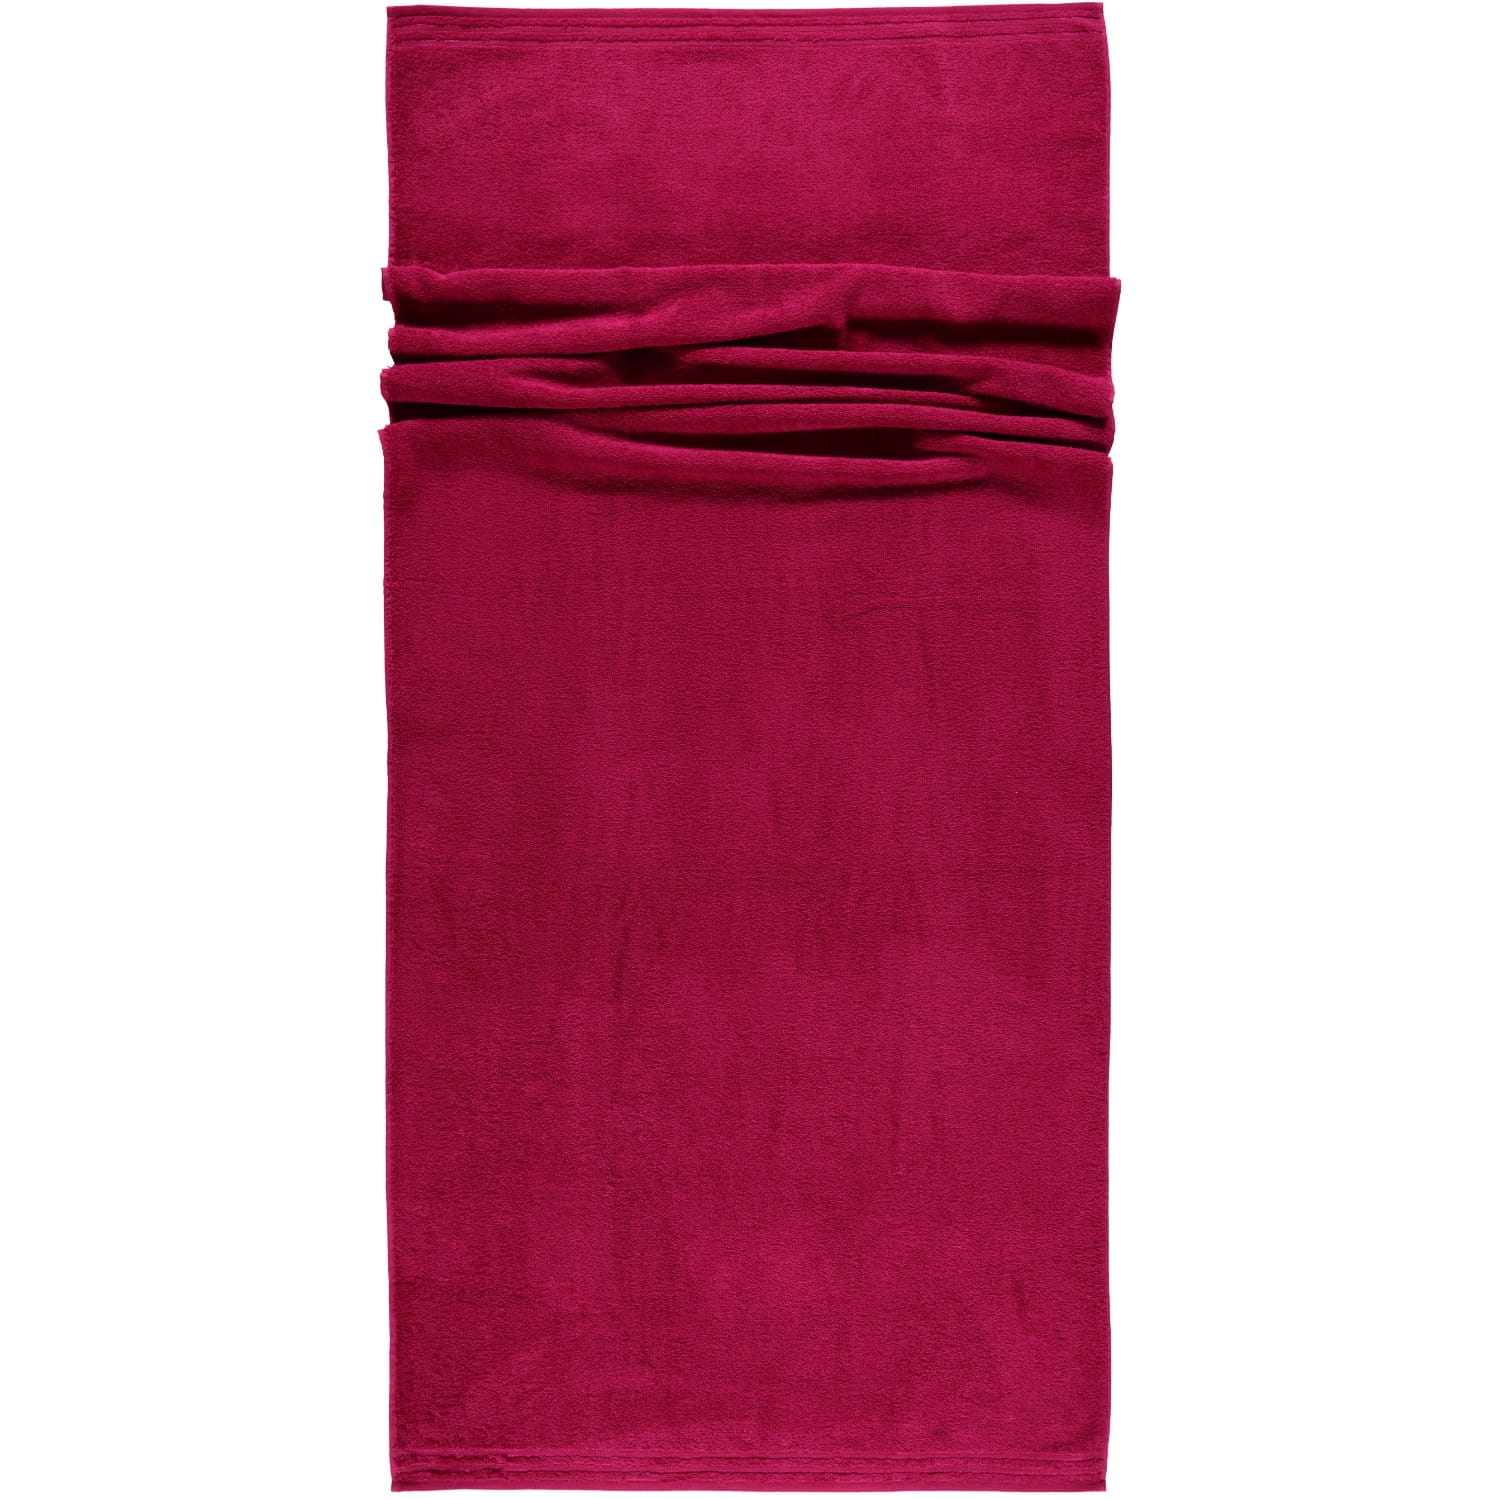 Vossen Calypso Feeling - Farbe: 377 - cranberry - Saunatuch 80x200 cm |  Vossen Handtücher | Vossen | Marken